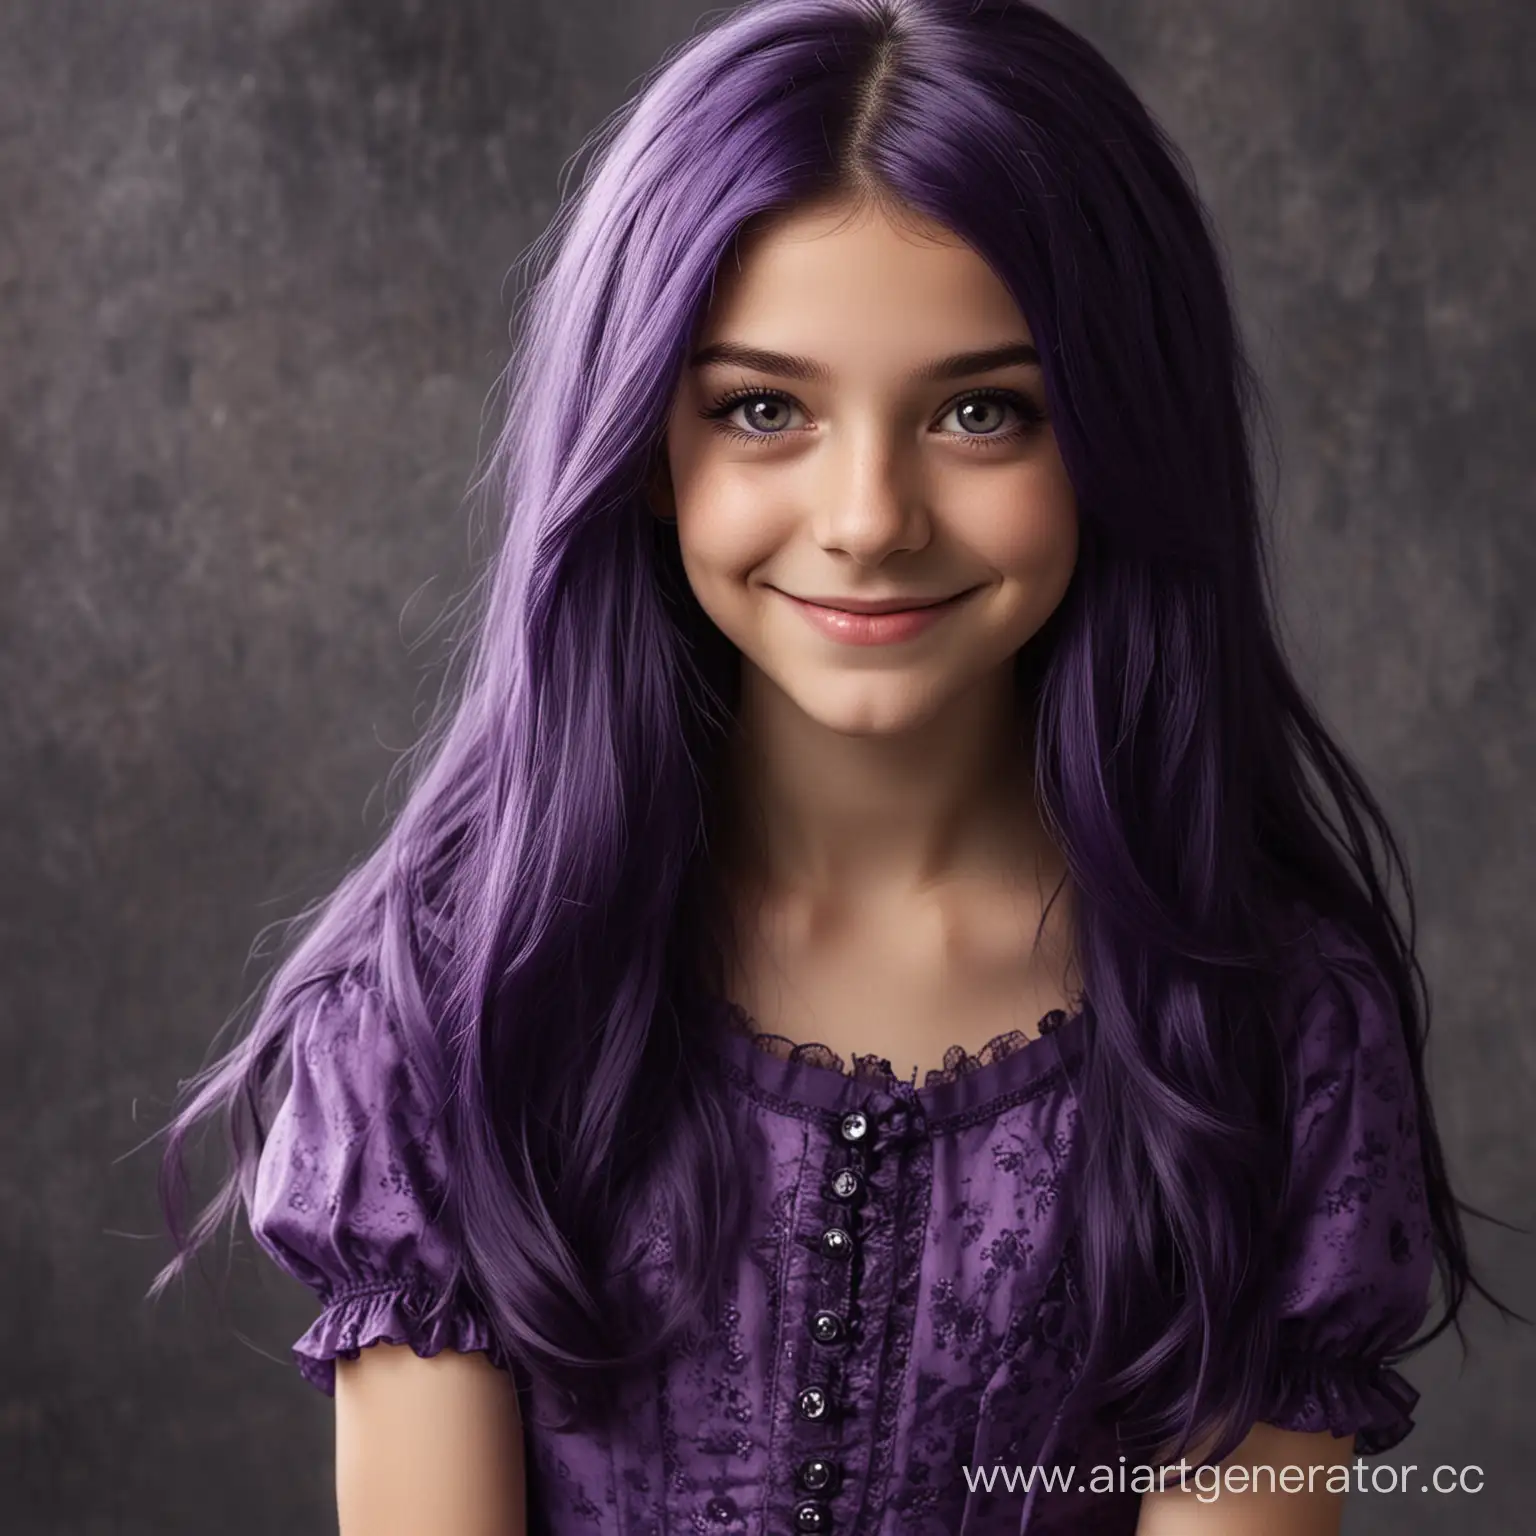 Mischievous-Teenage-Girl-with-Long-Dark-Purple-Hair-and-Eyes-in-Elegant-Purple-Attire